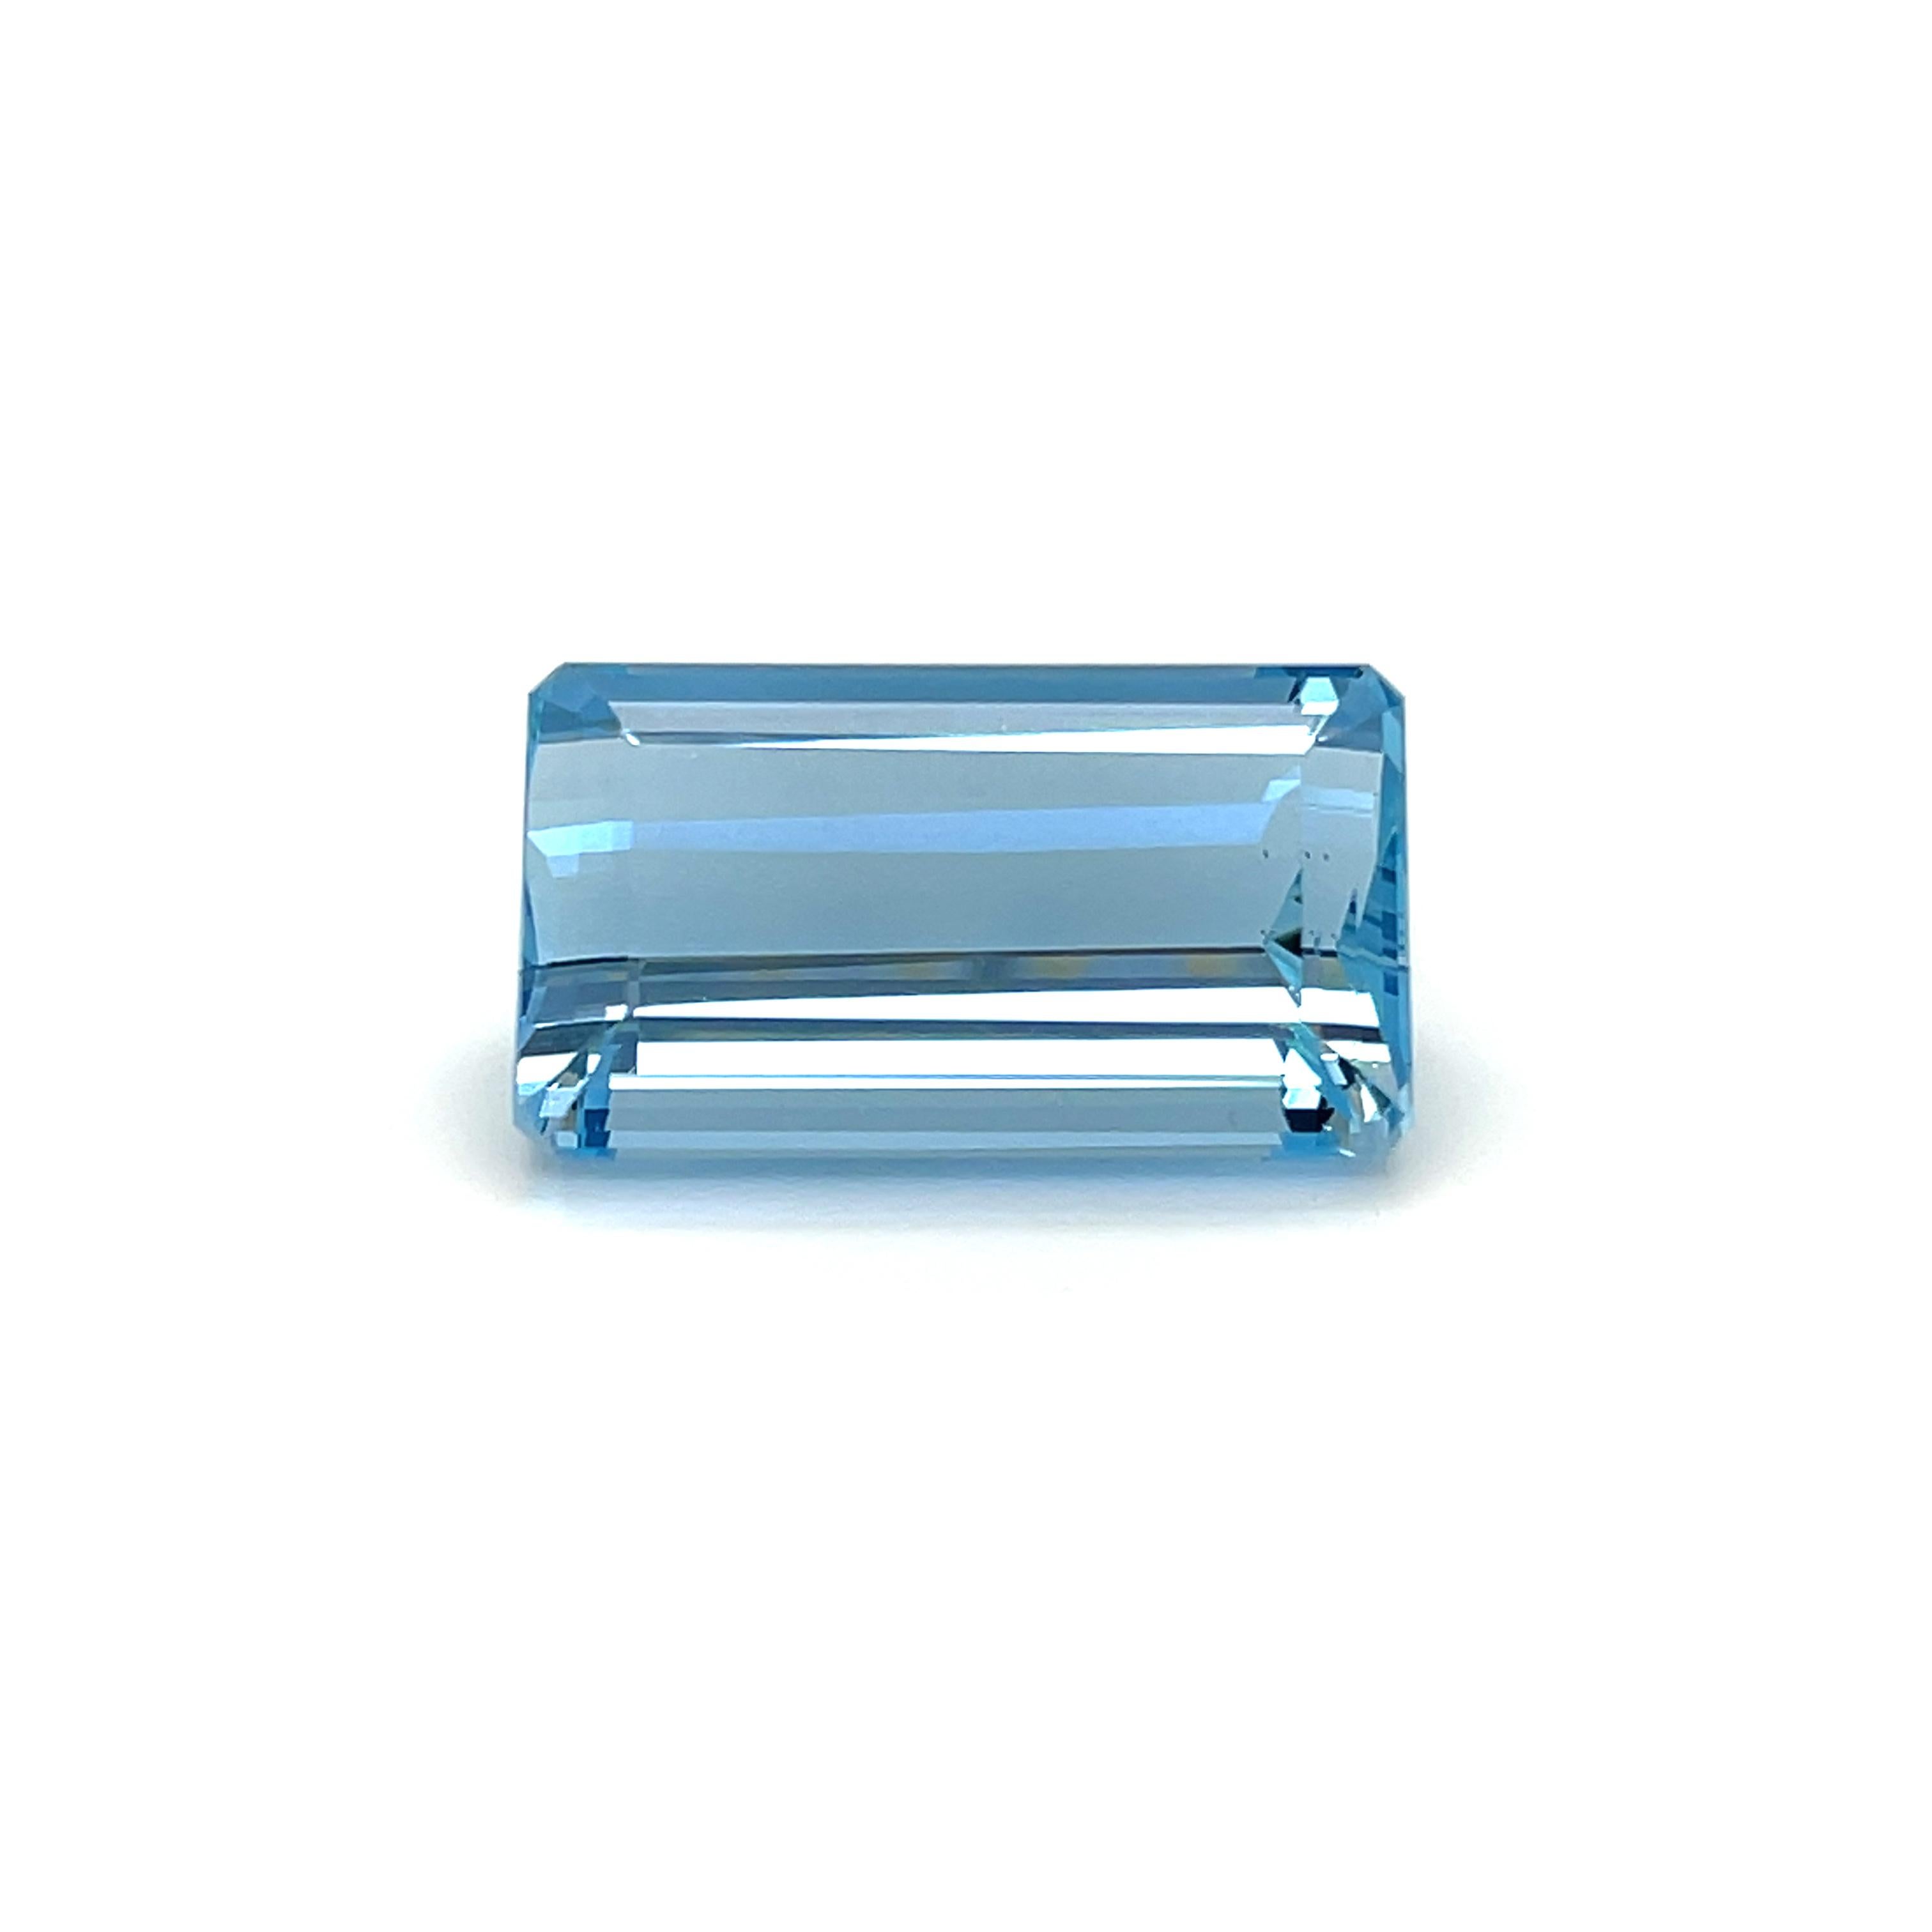 20.74ct Santa Maria Aquamarine Emerald Cut
Color: Santa Maria Blue
Clarity: Flawless
Provenance: Brazil
Dimensions: 21.86 x 12.94 x 9.12mm